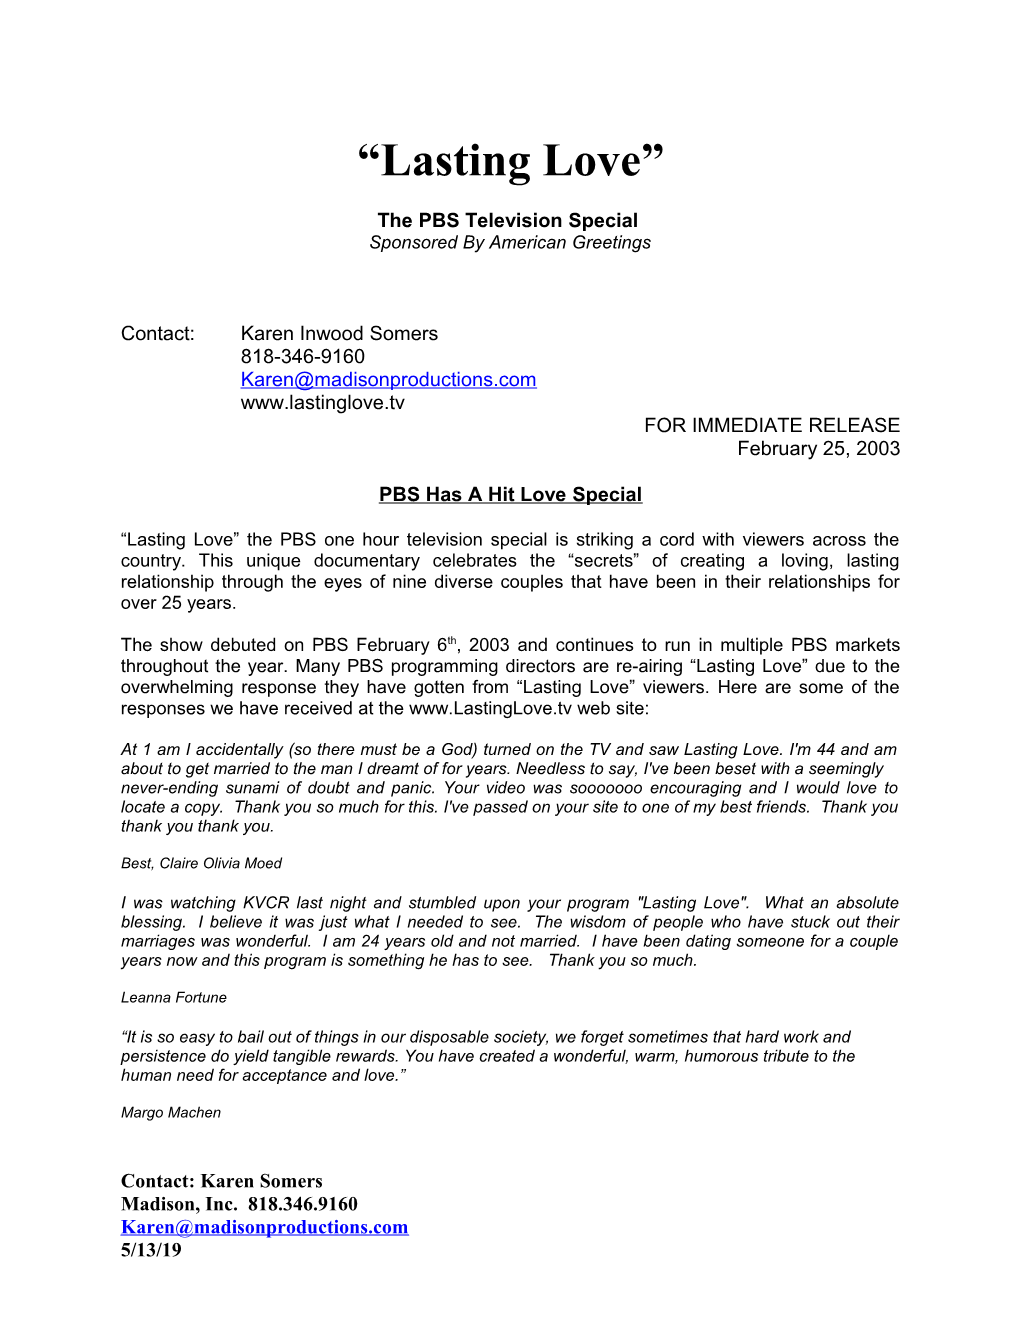 Lasting Love Show Description